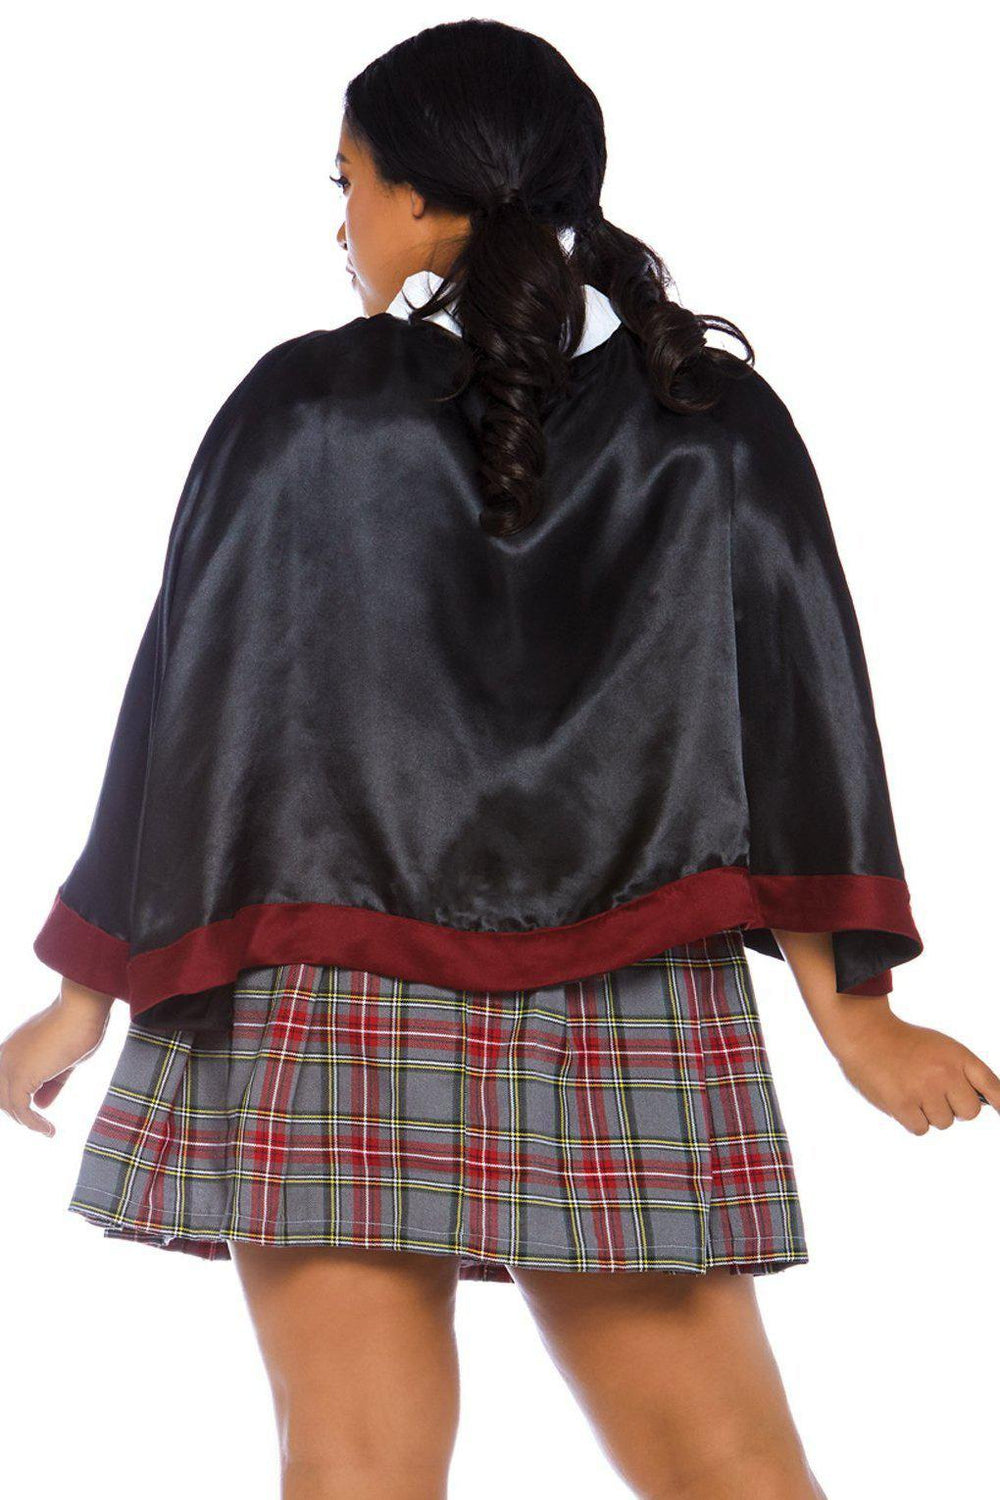 Plus Size Spellbinding School Girl Costume-School Girl Costumes-Leg Avenue-SEXYSHOES.COM